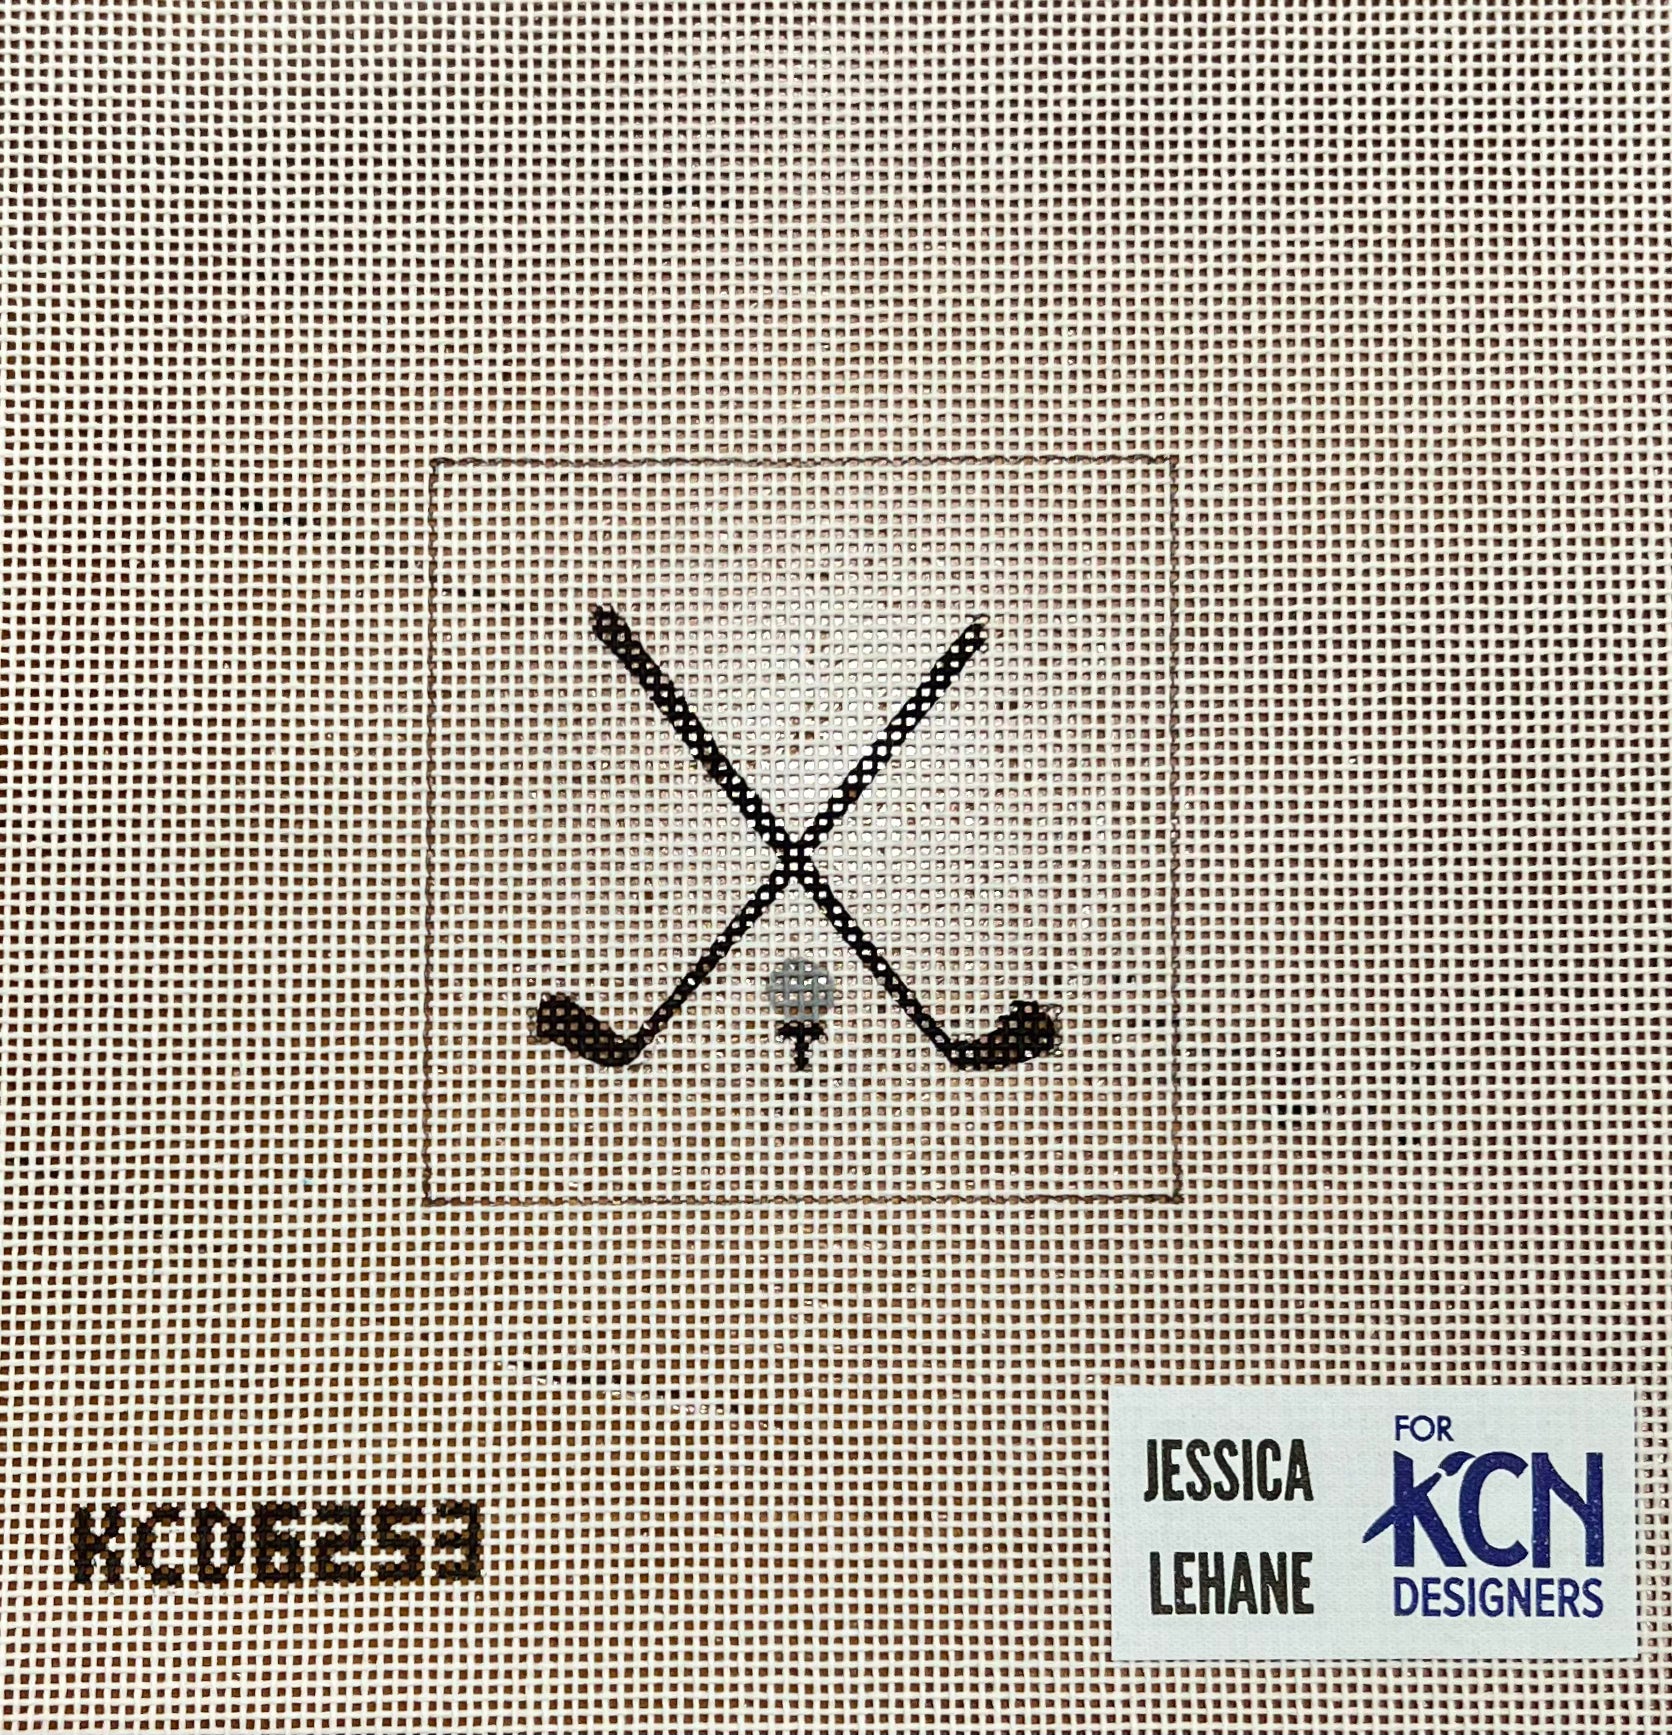 KCN Designers KCD6253 Golf Clubs Flask Insert